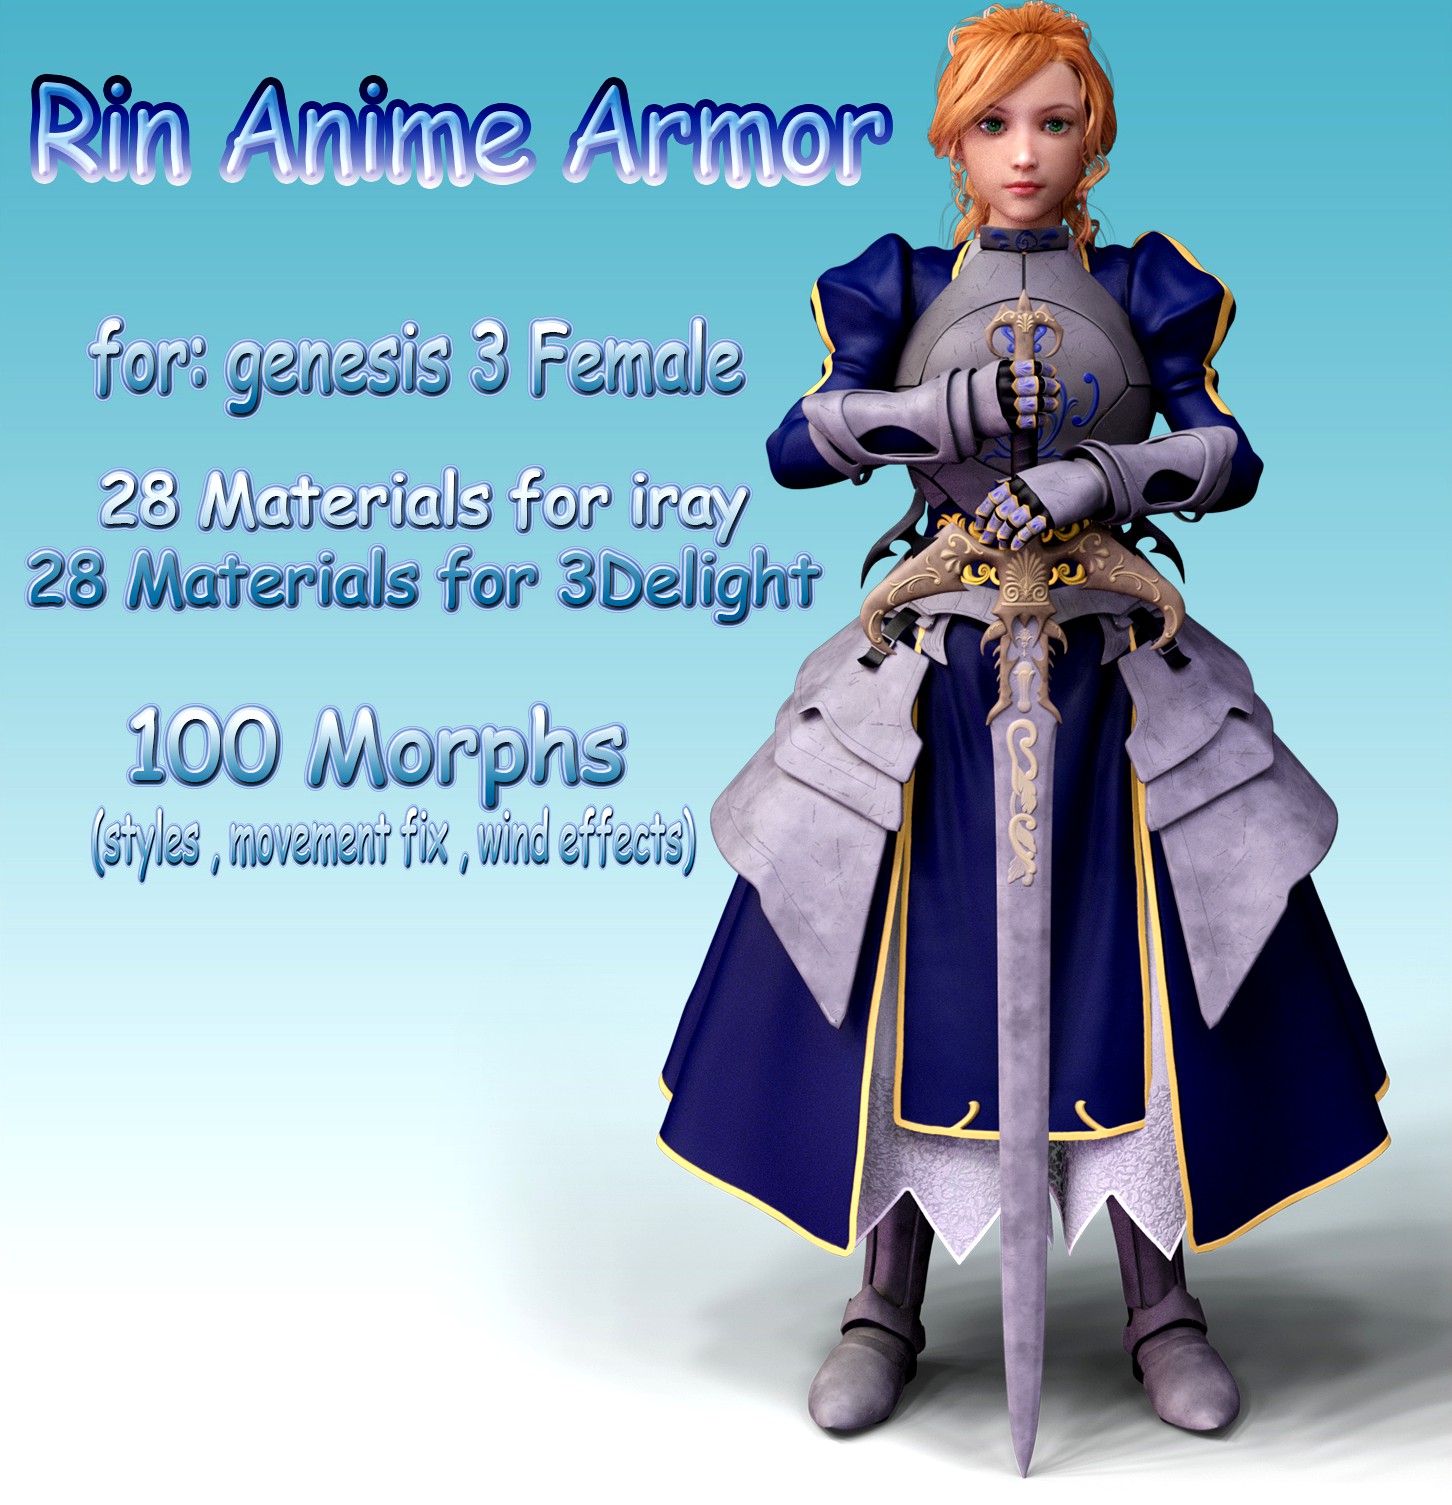 Rin Anime Armor for G3F